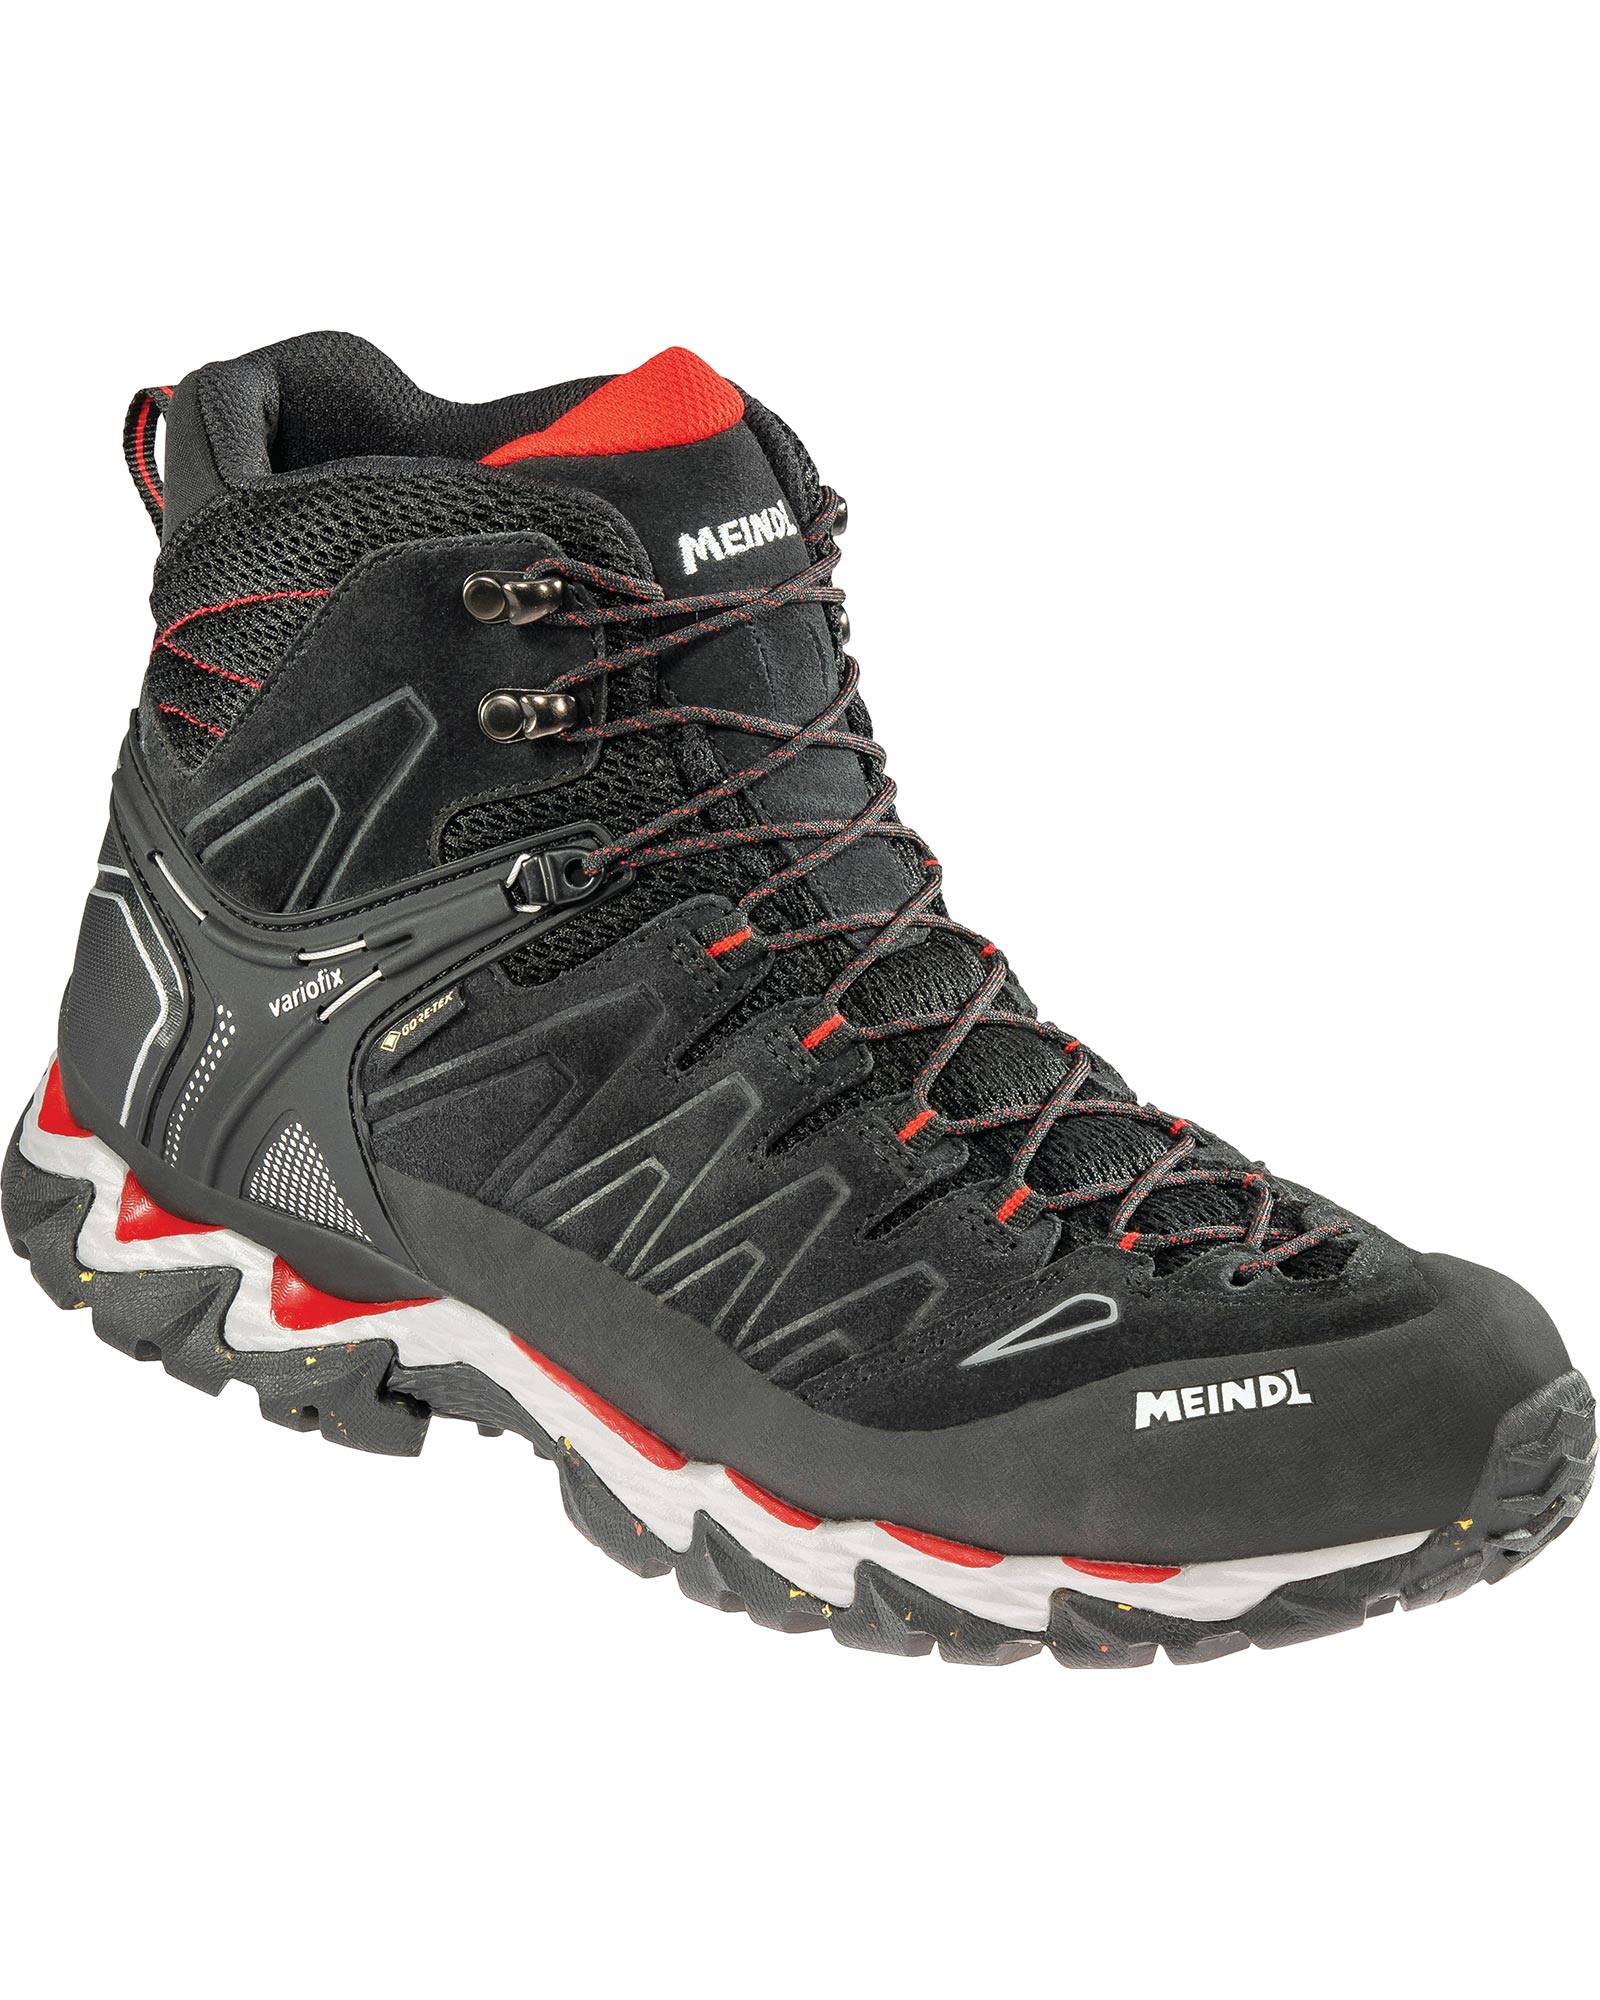 Meindl Lite Hike GORE TEX Men’s Boots - Black/Red UK 11.5